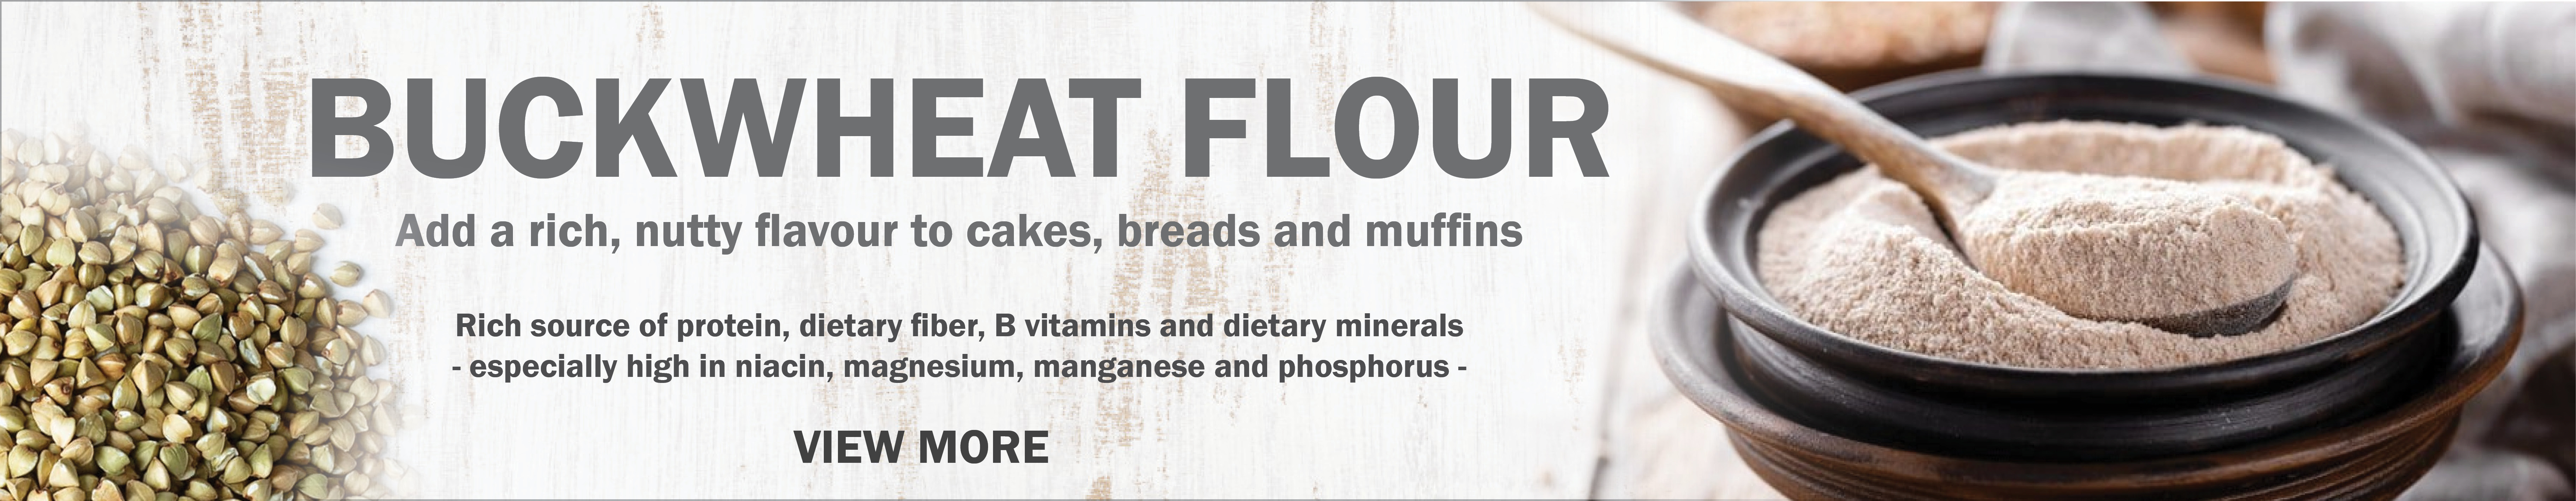 Buckwheat Flour Banner.jpg